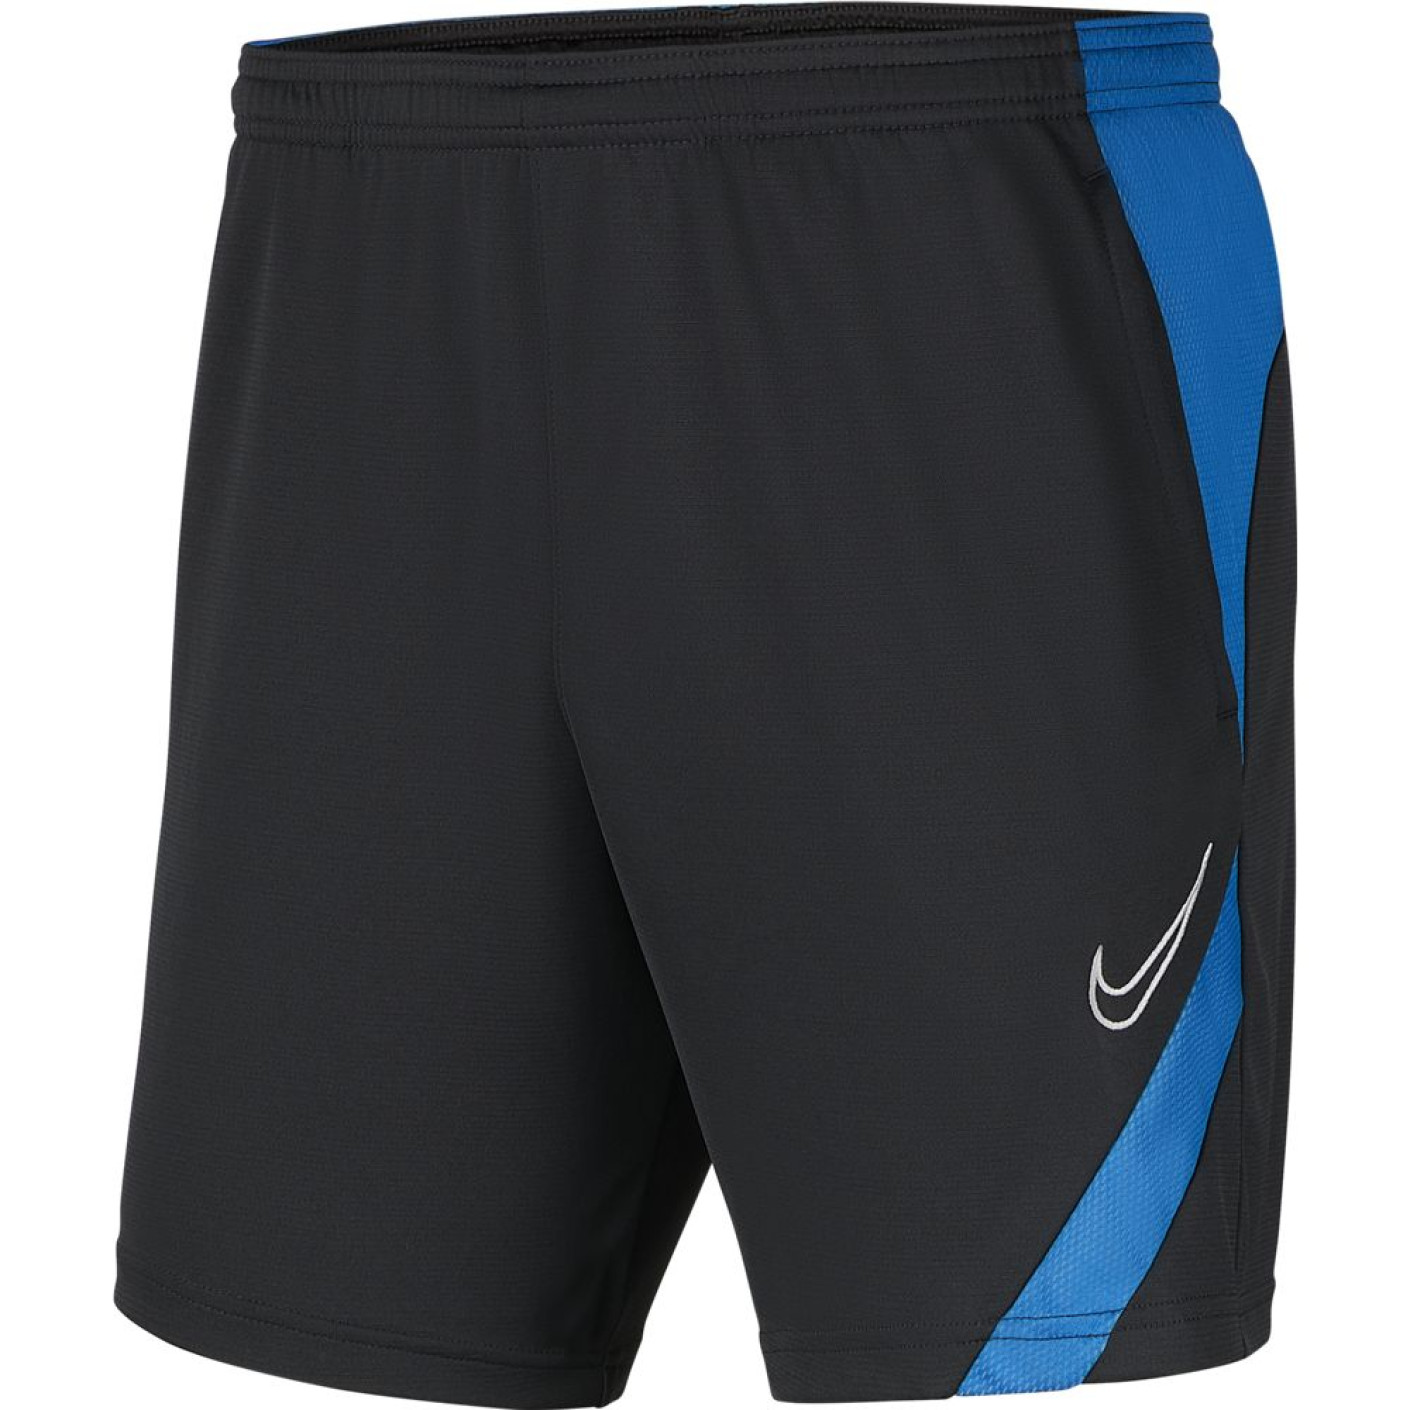 Short de football Nike Dry Academy Pro Gris foncé Bleu